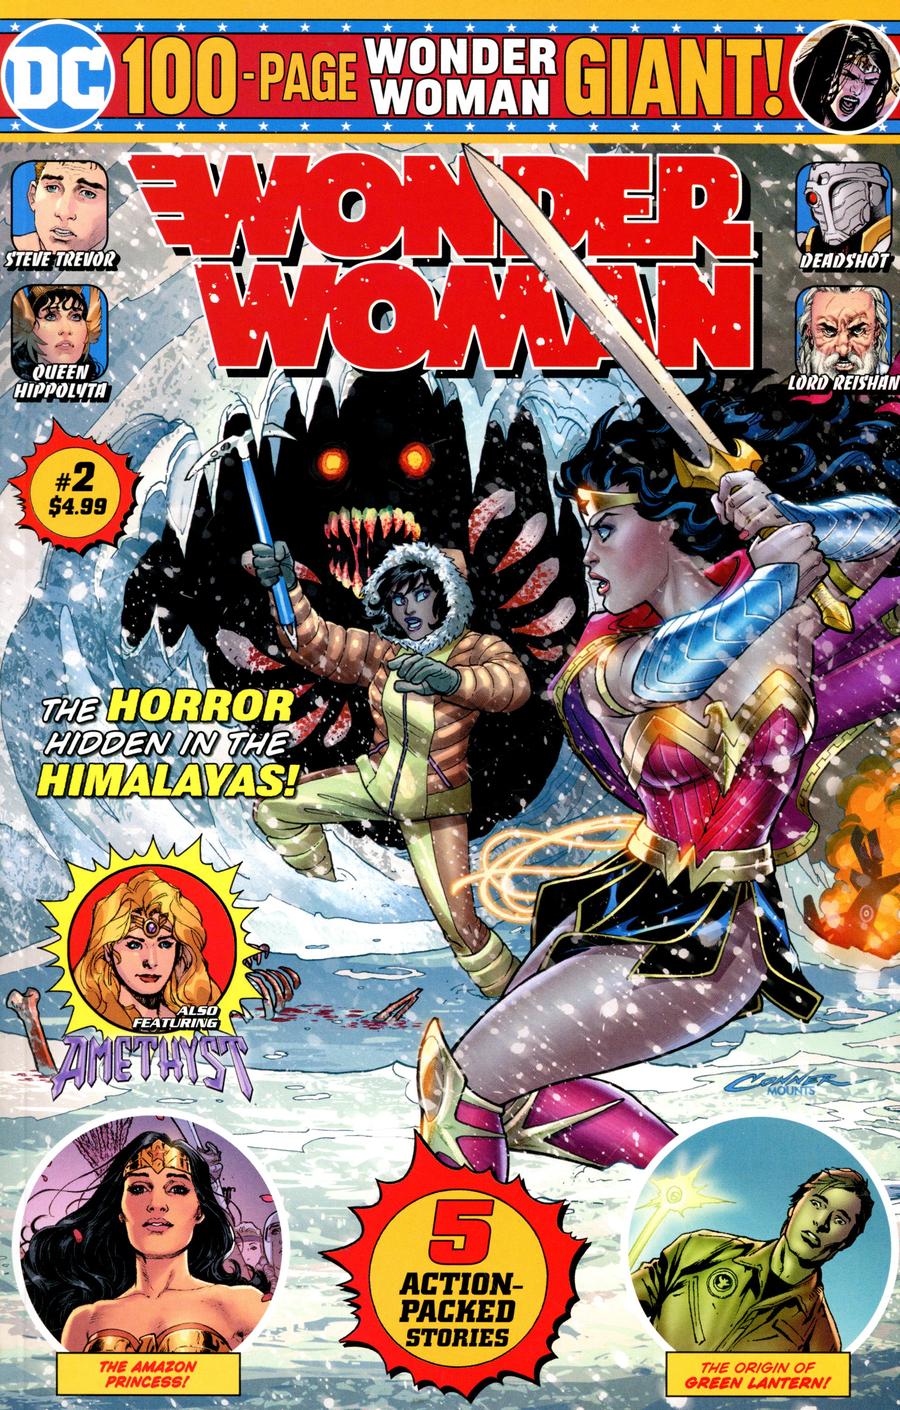 Wonder Woman Giant #2